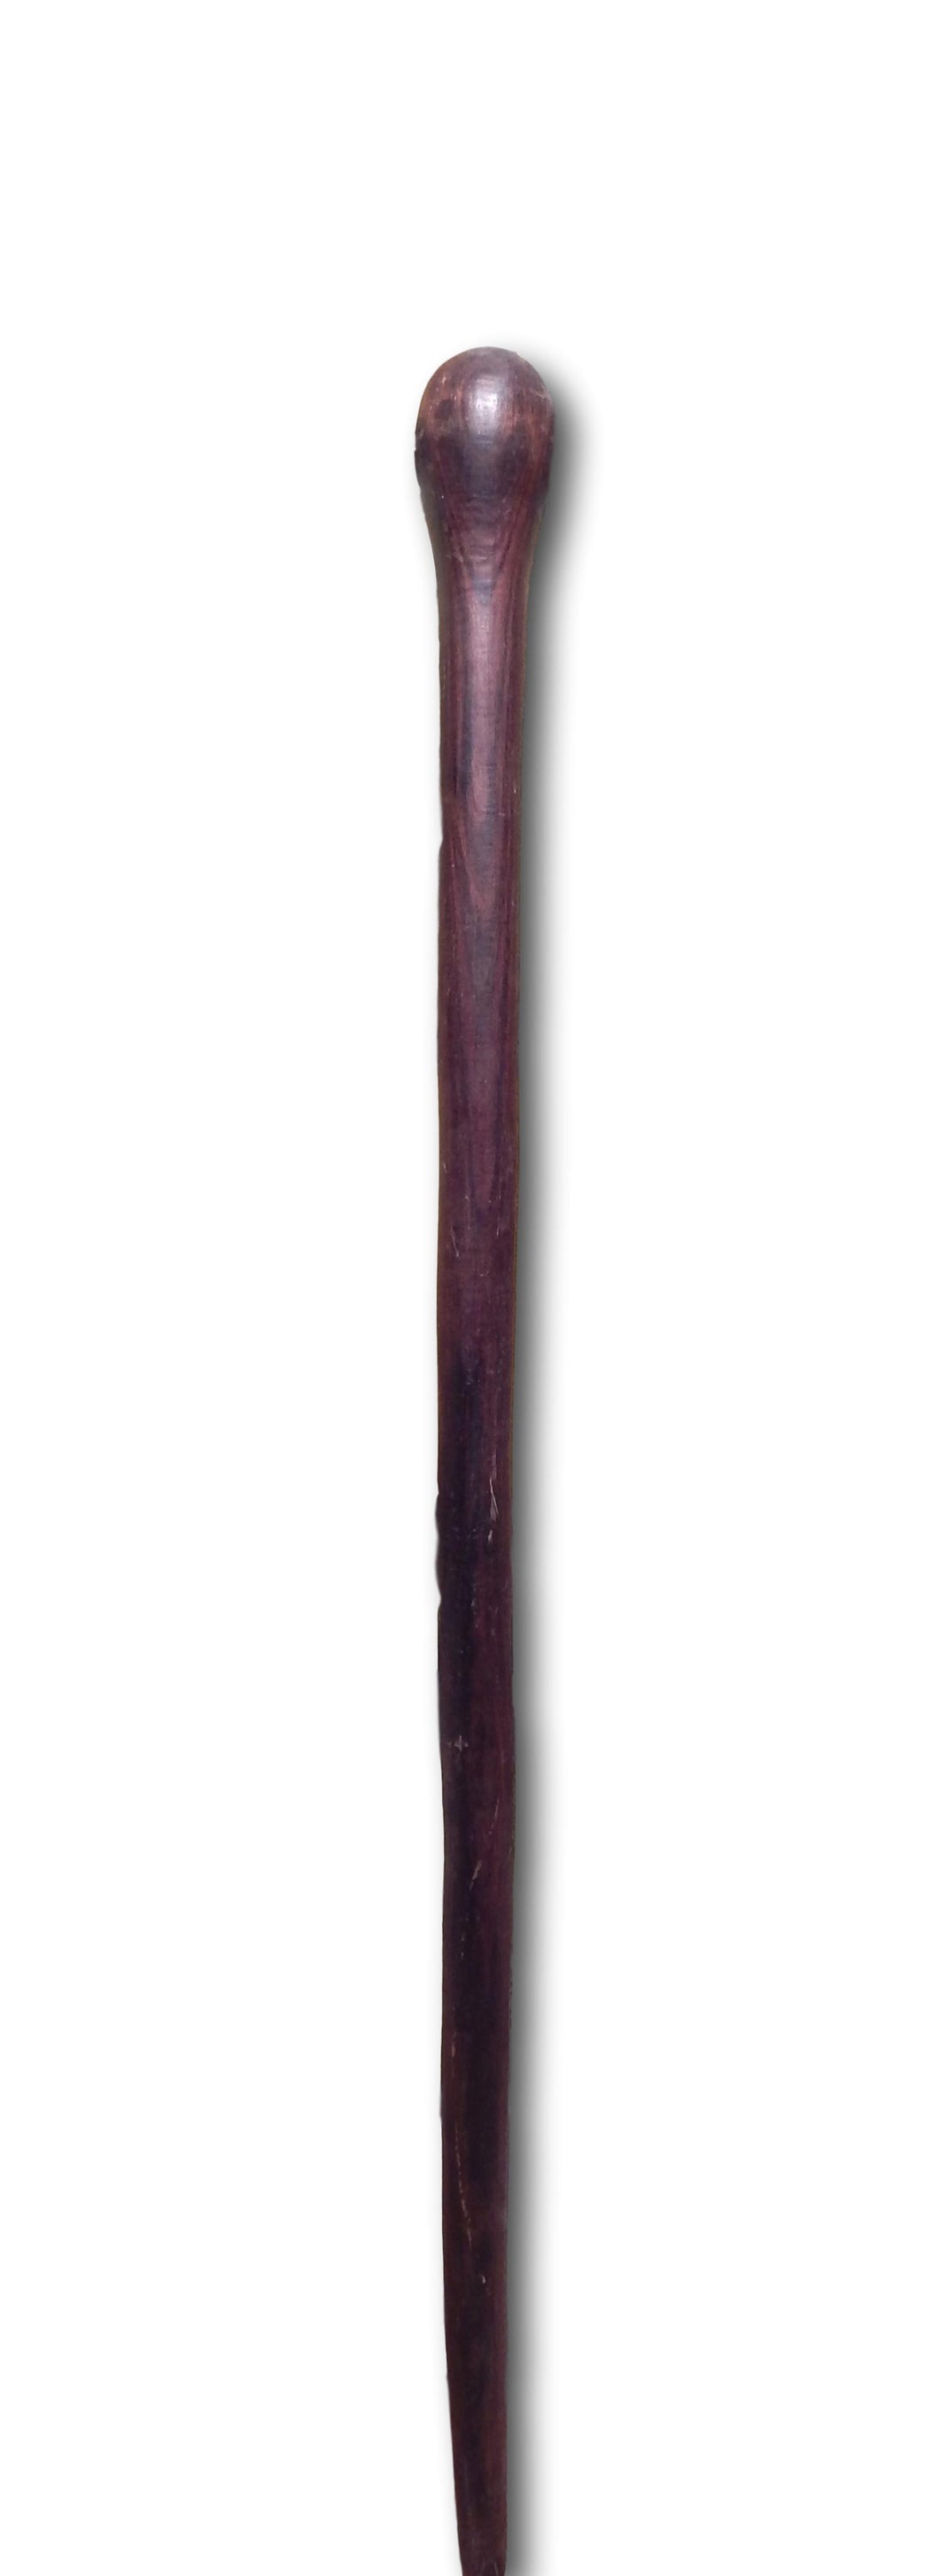 Walking stick handcrafted from Mukwa wood